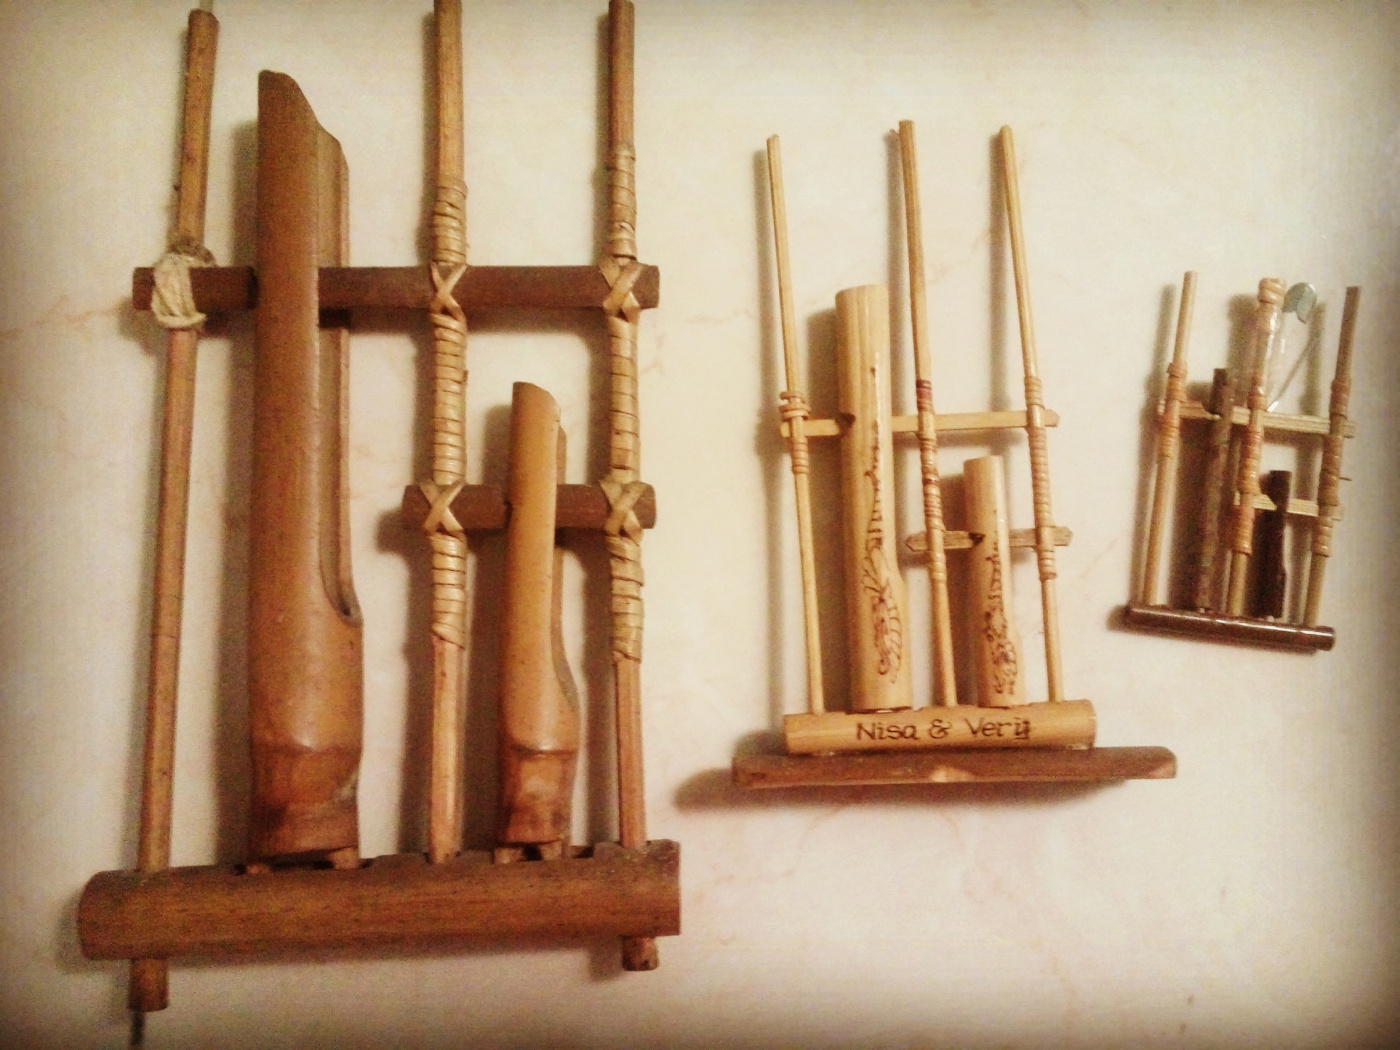 gambar angklung alat musik dari bambu